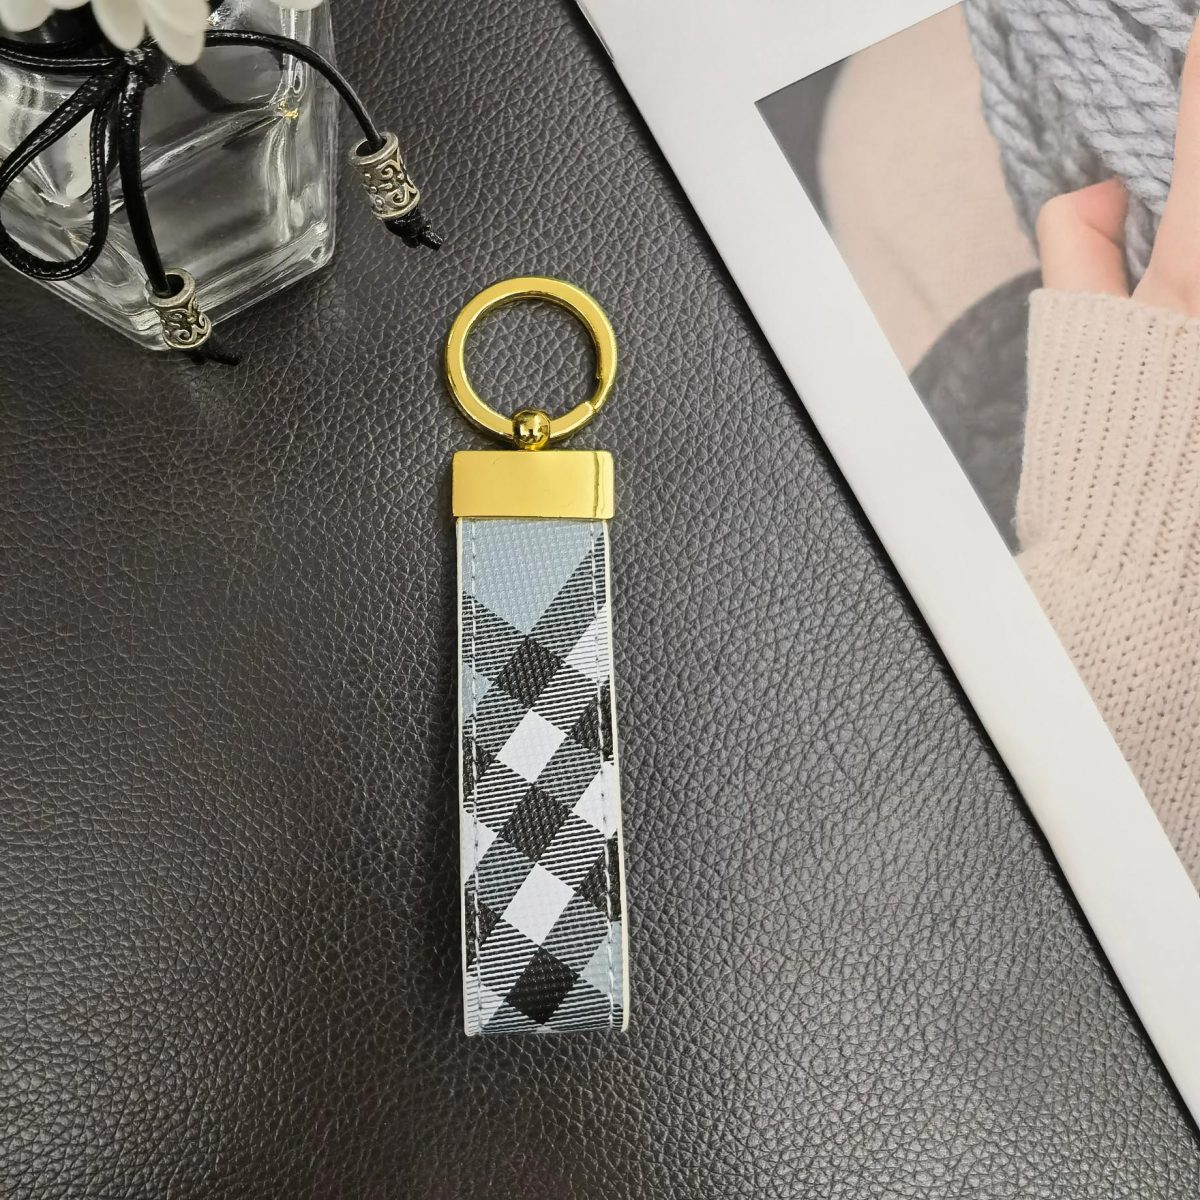 Chic Burberry keychain in elegant